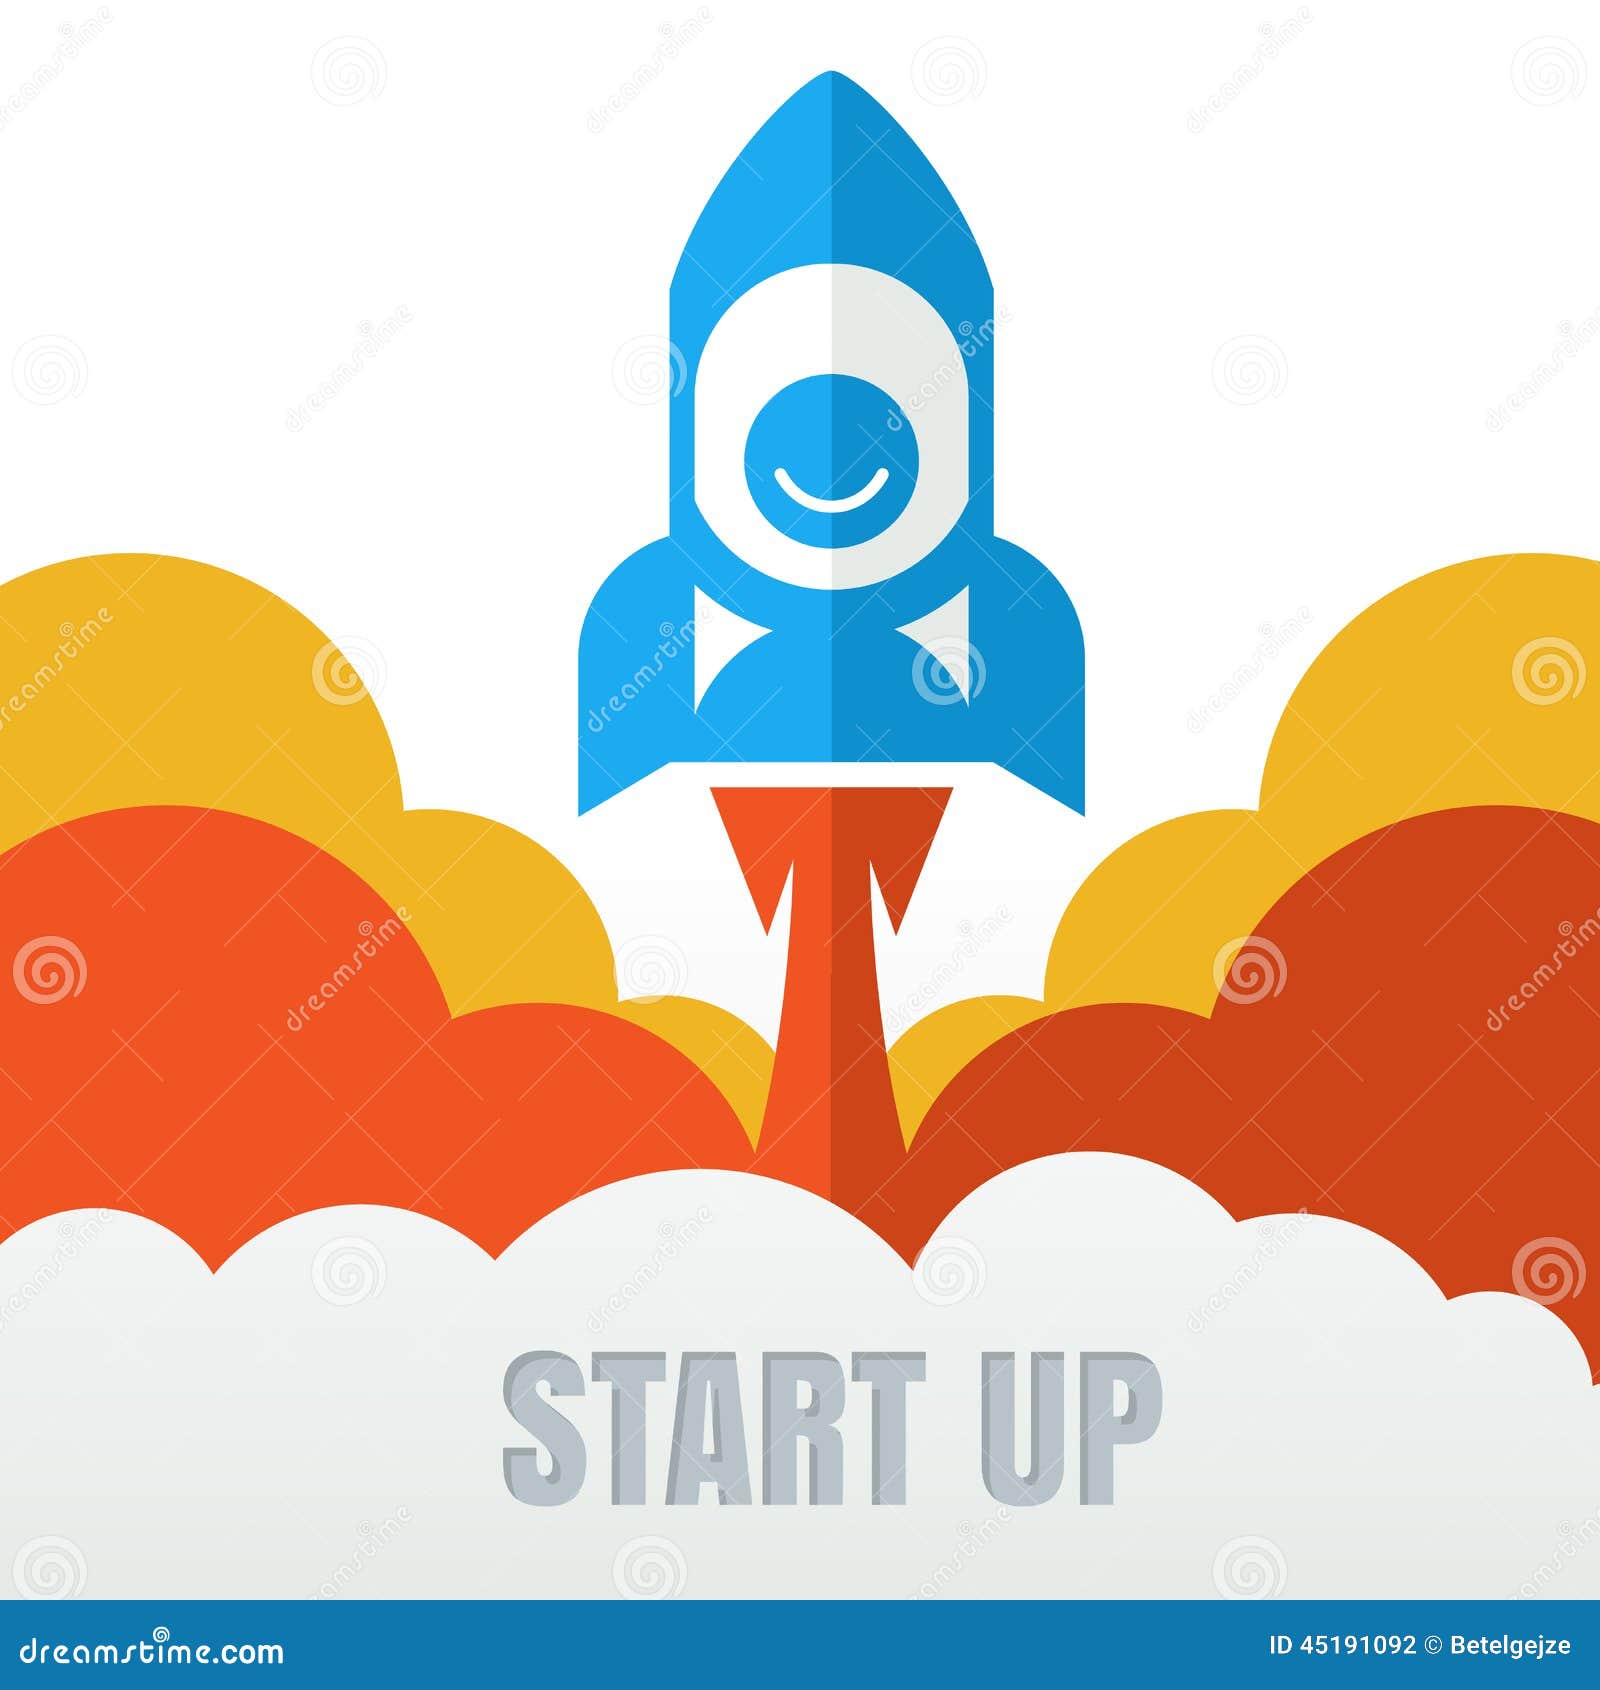 Rocket Launcher Vector Logo And Icon Stock Photography | CartoonDealer